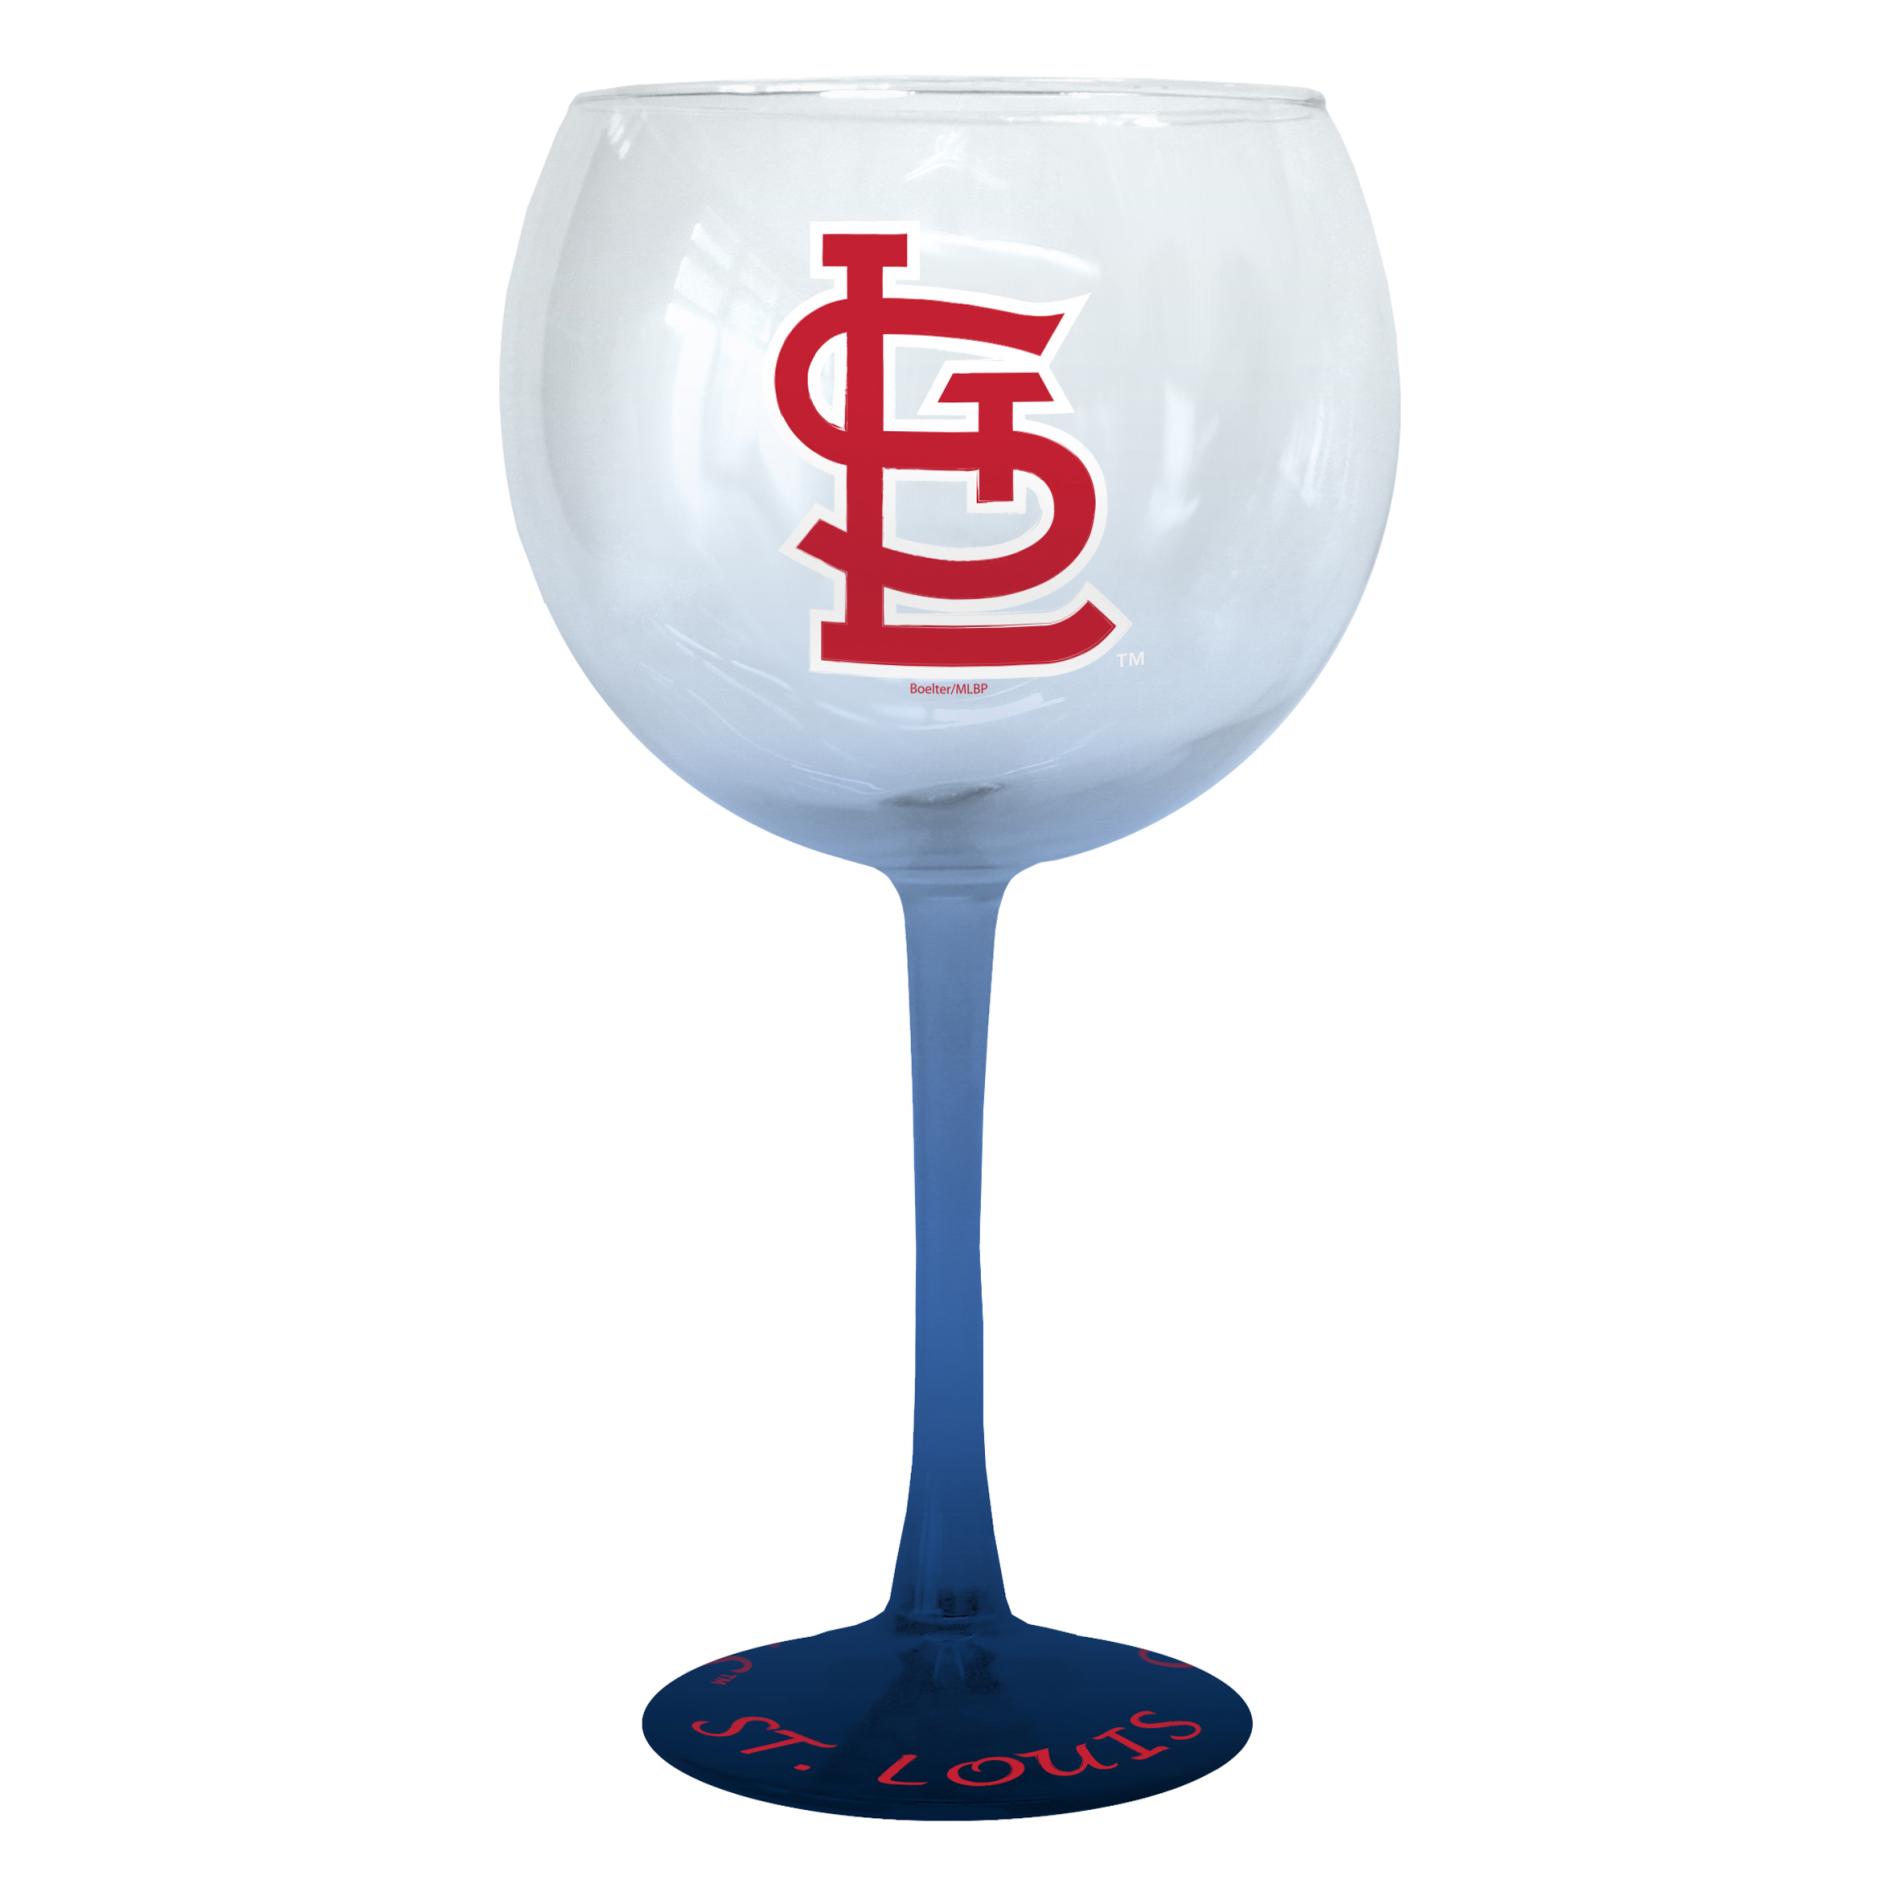 MLB Balloon Wine Glass - St. Louis Cardinals